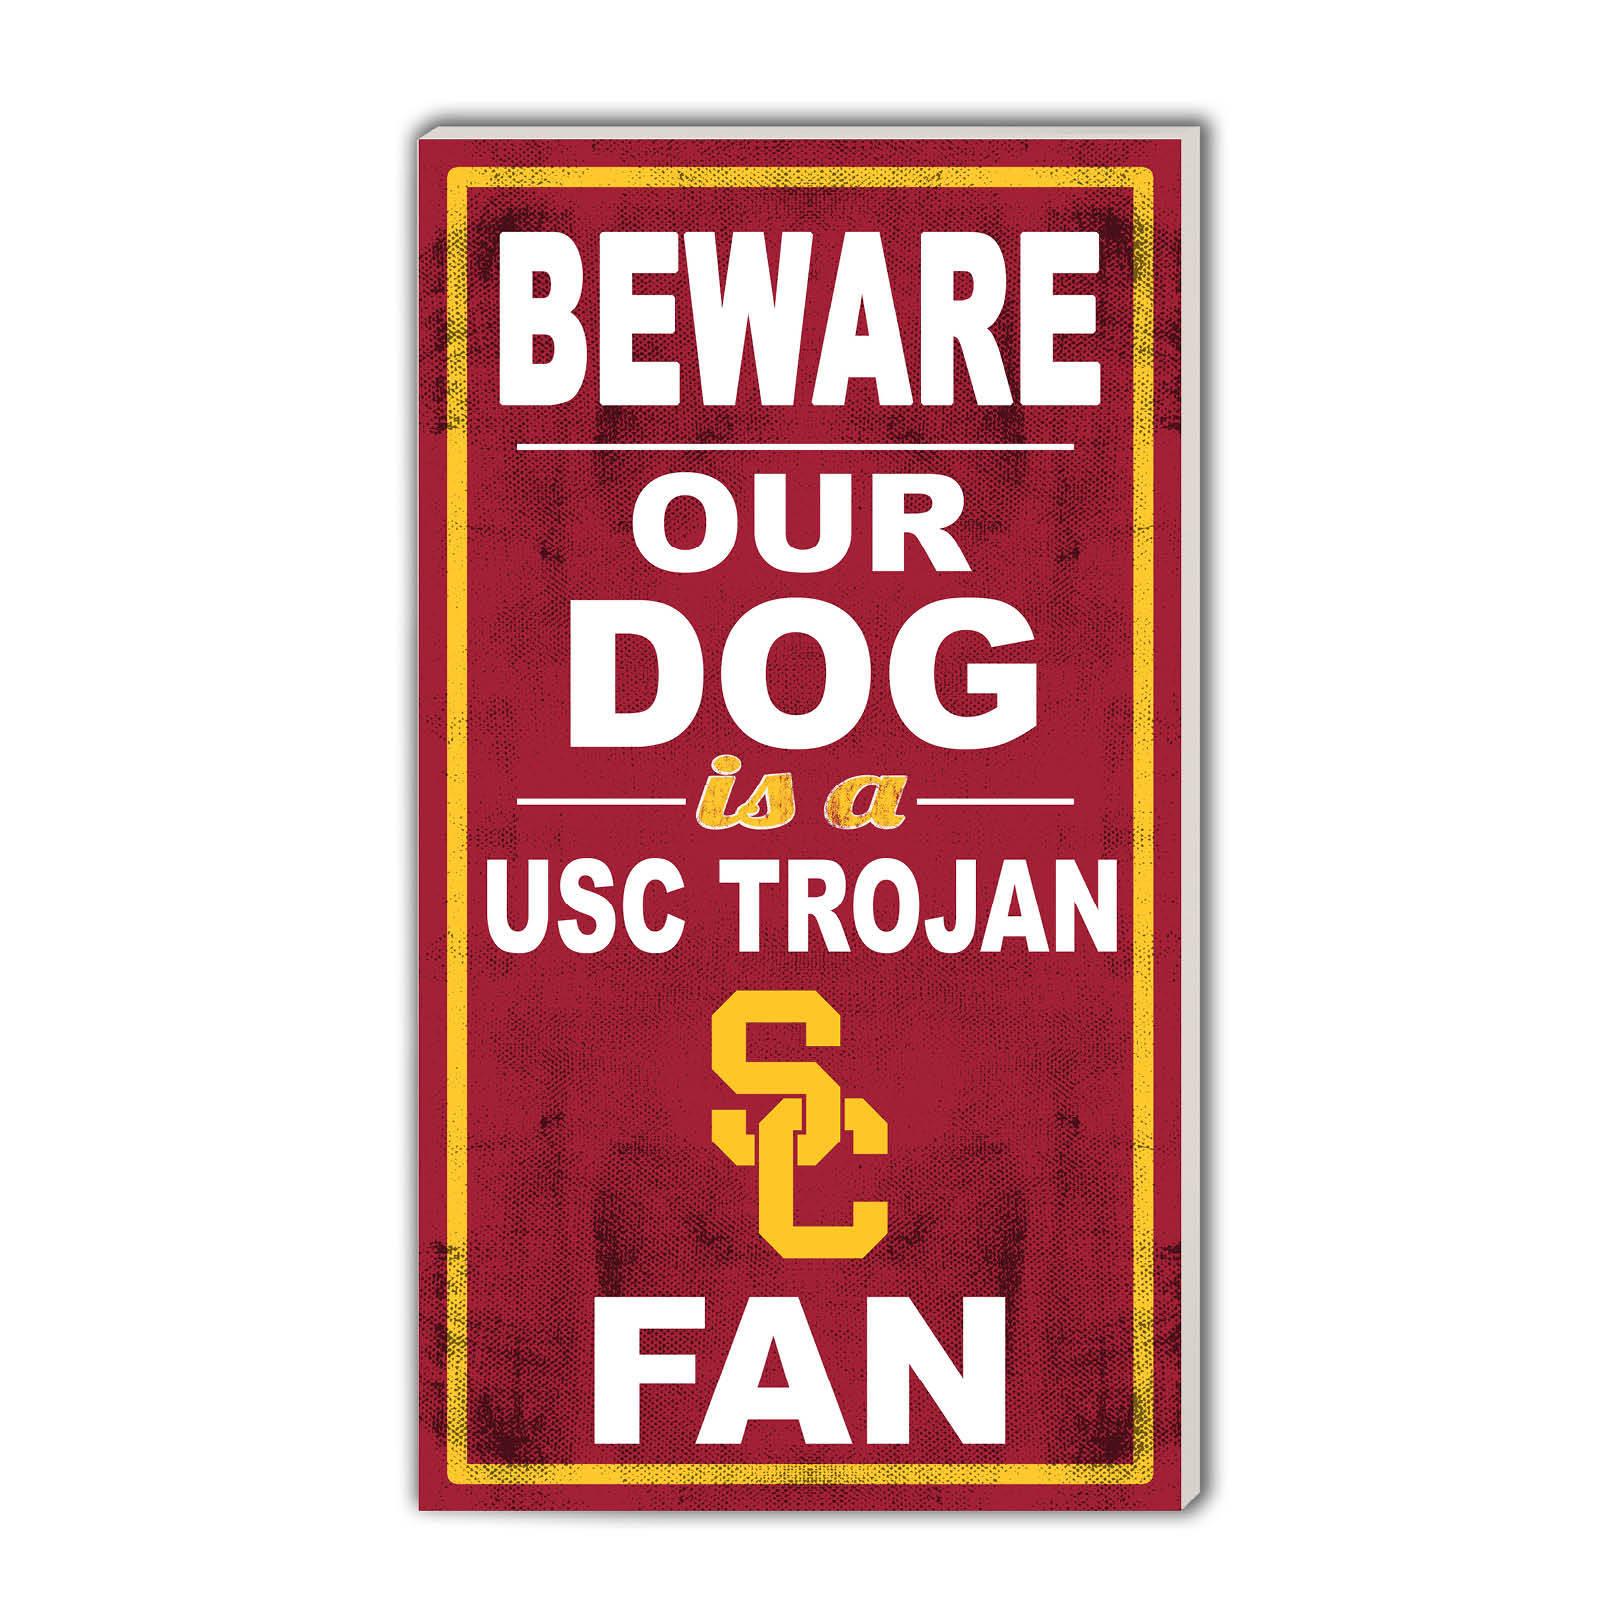 USC Trojans Beware of Dog Wooden Sign 11x20 by KH Sports Fan image01